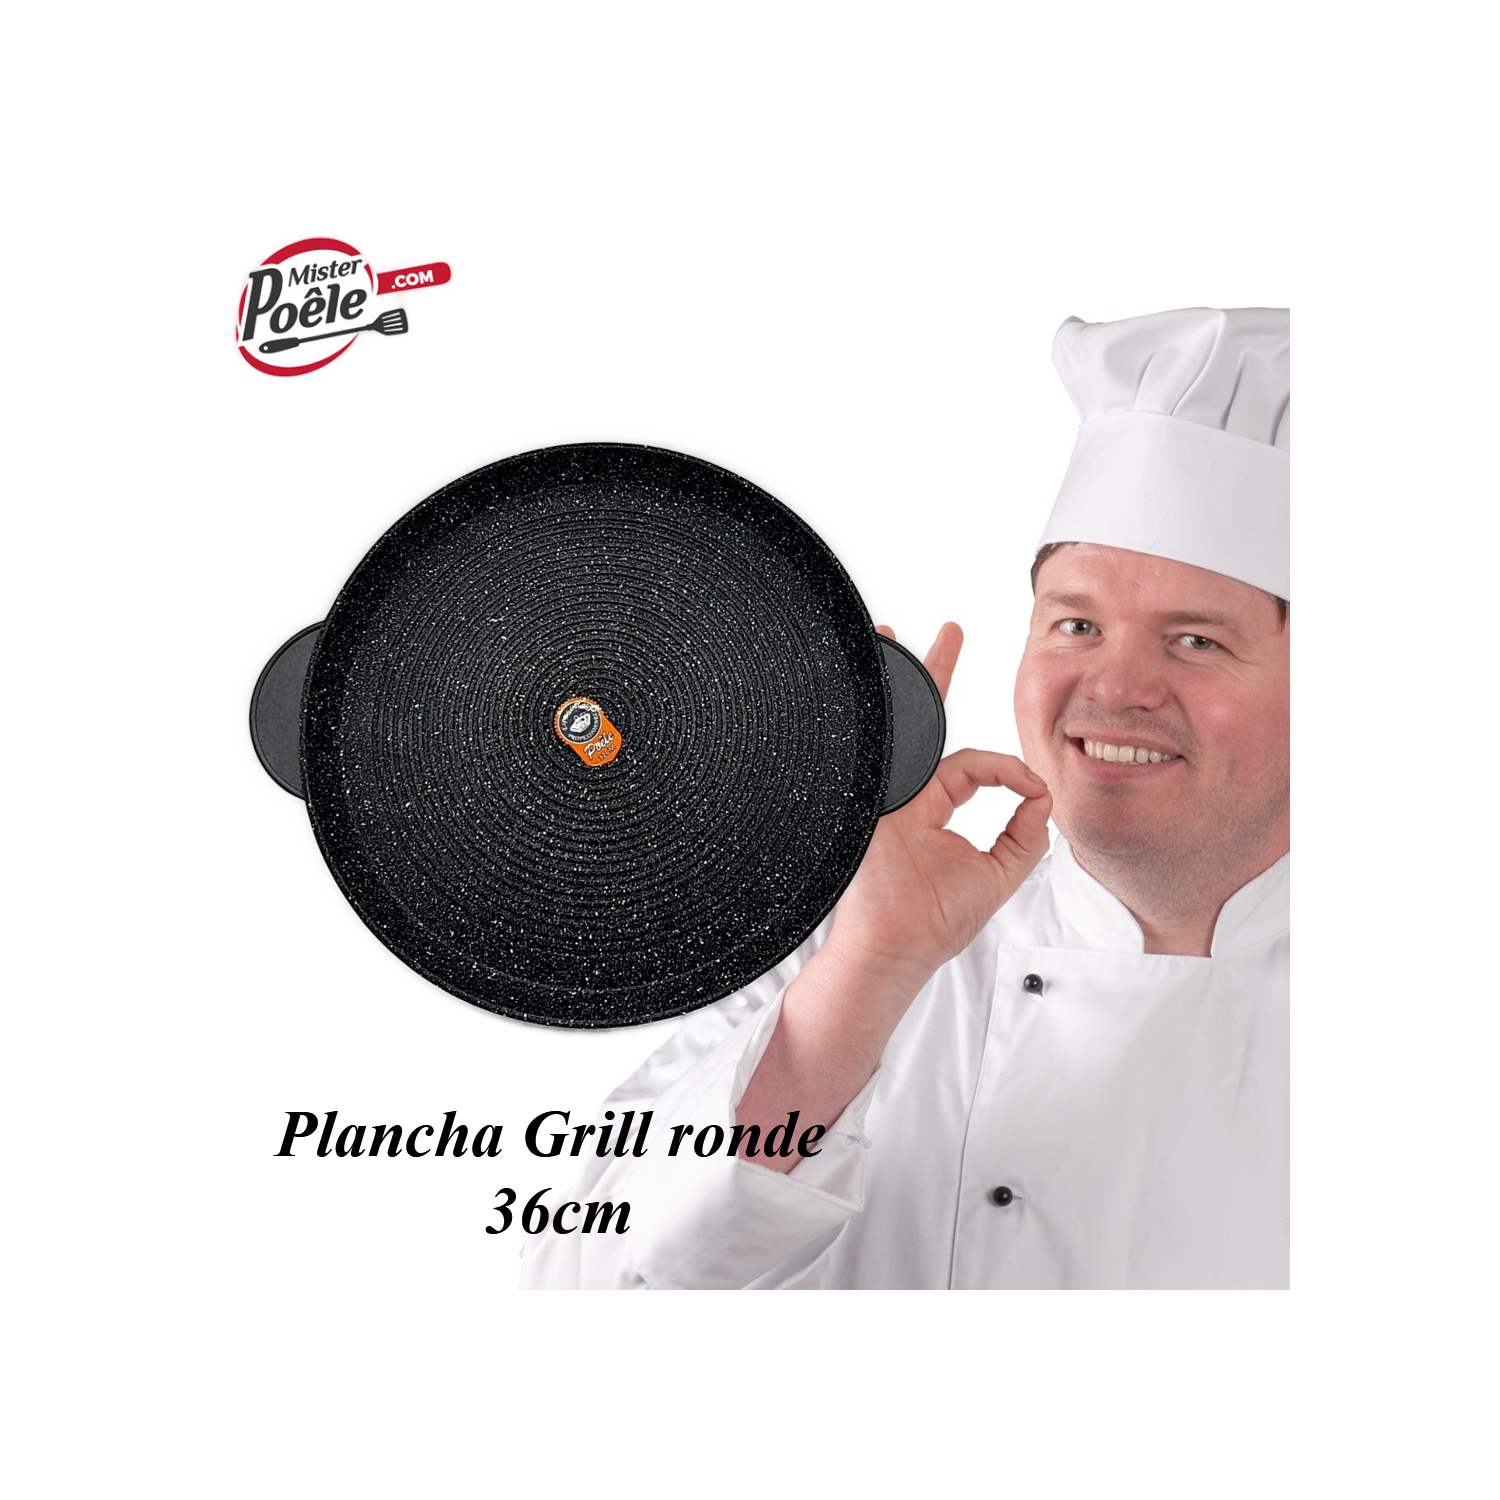 Plancha Grill ronde 36cm